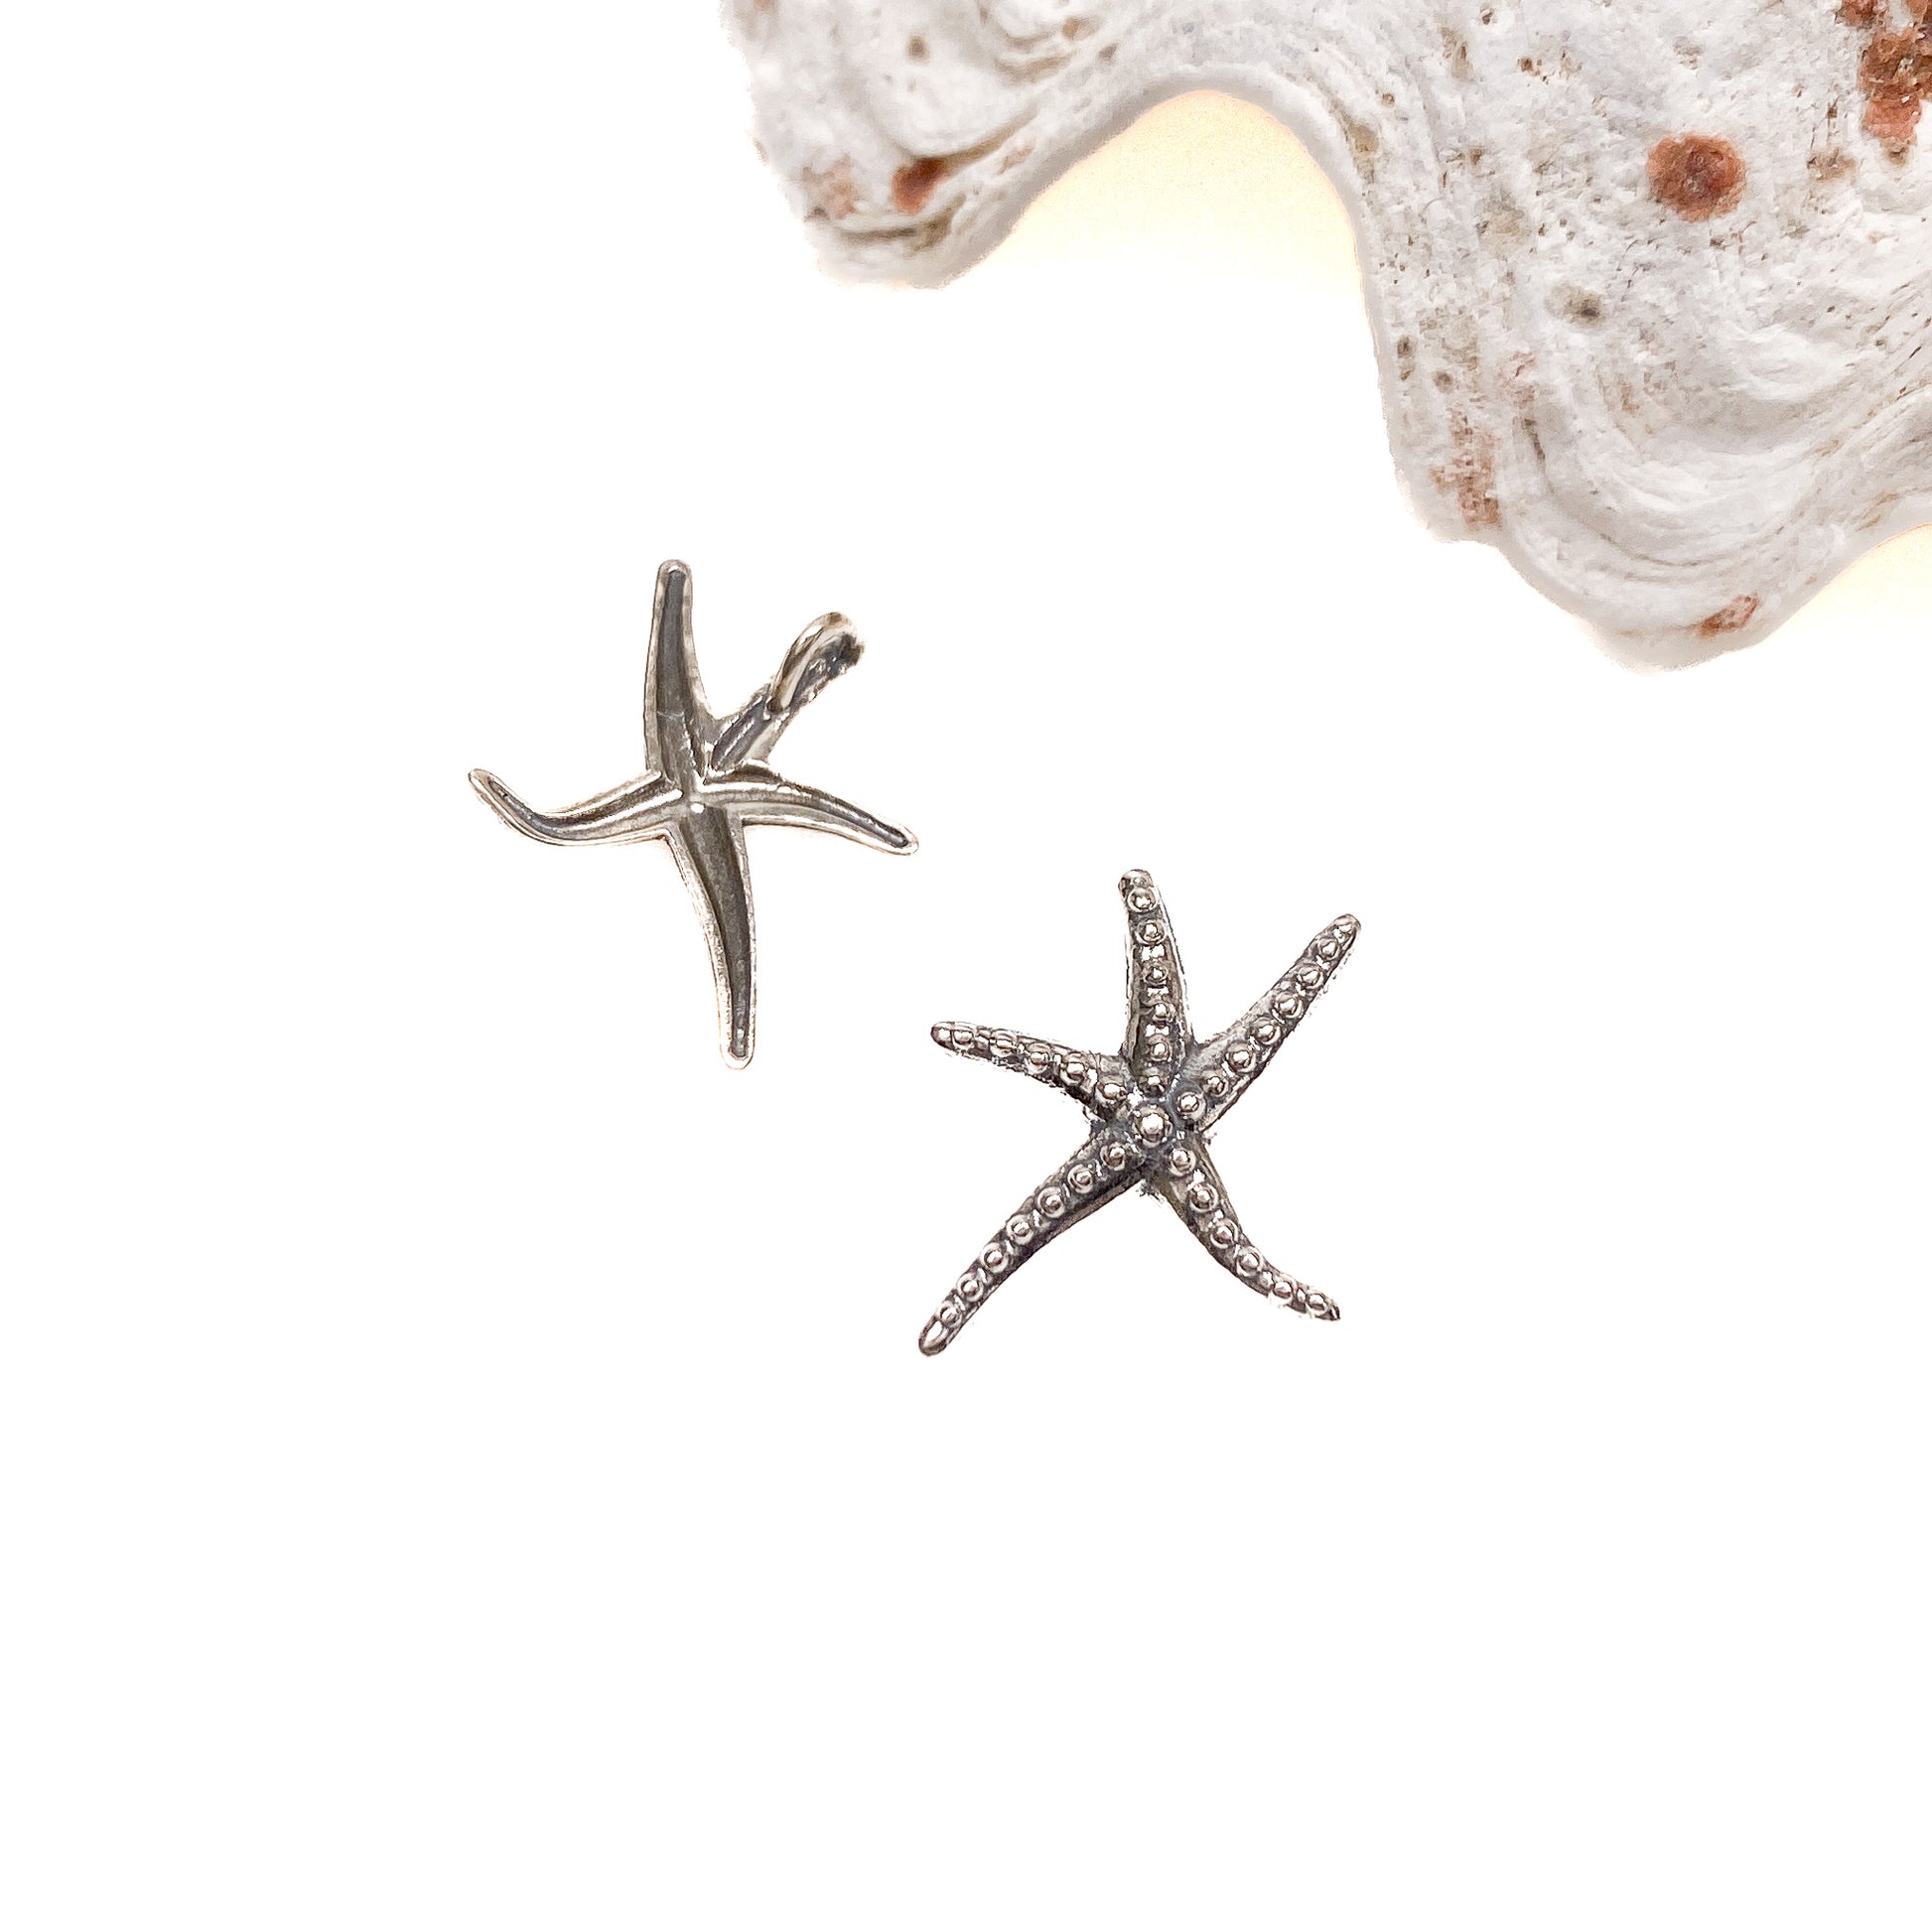 Starfish Wish Pendant (Sterling Silver) - 1 pc.